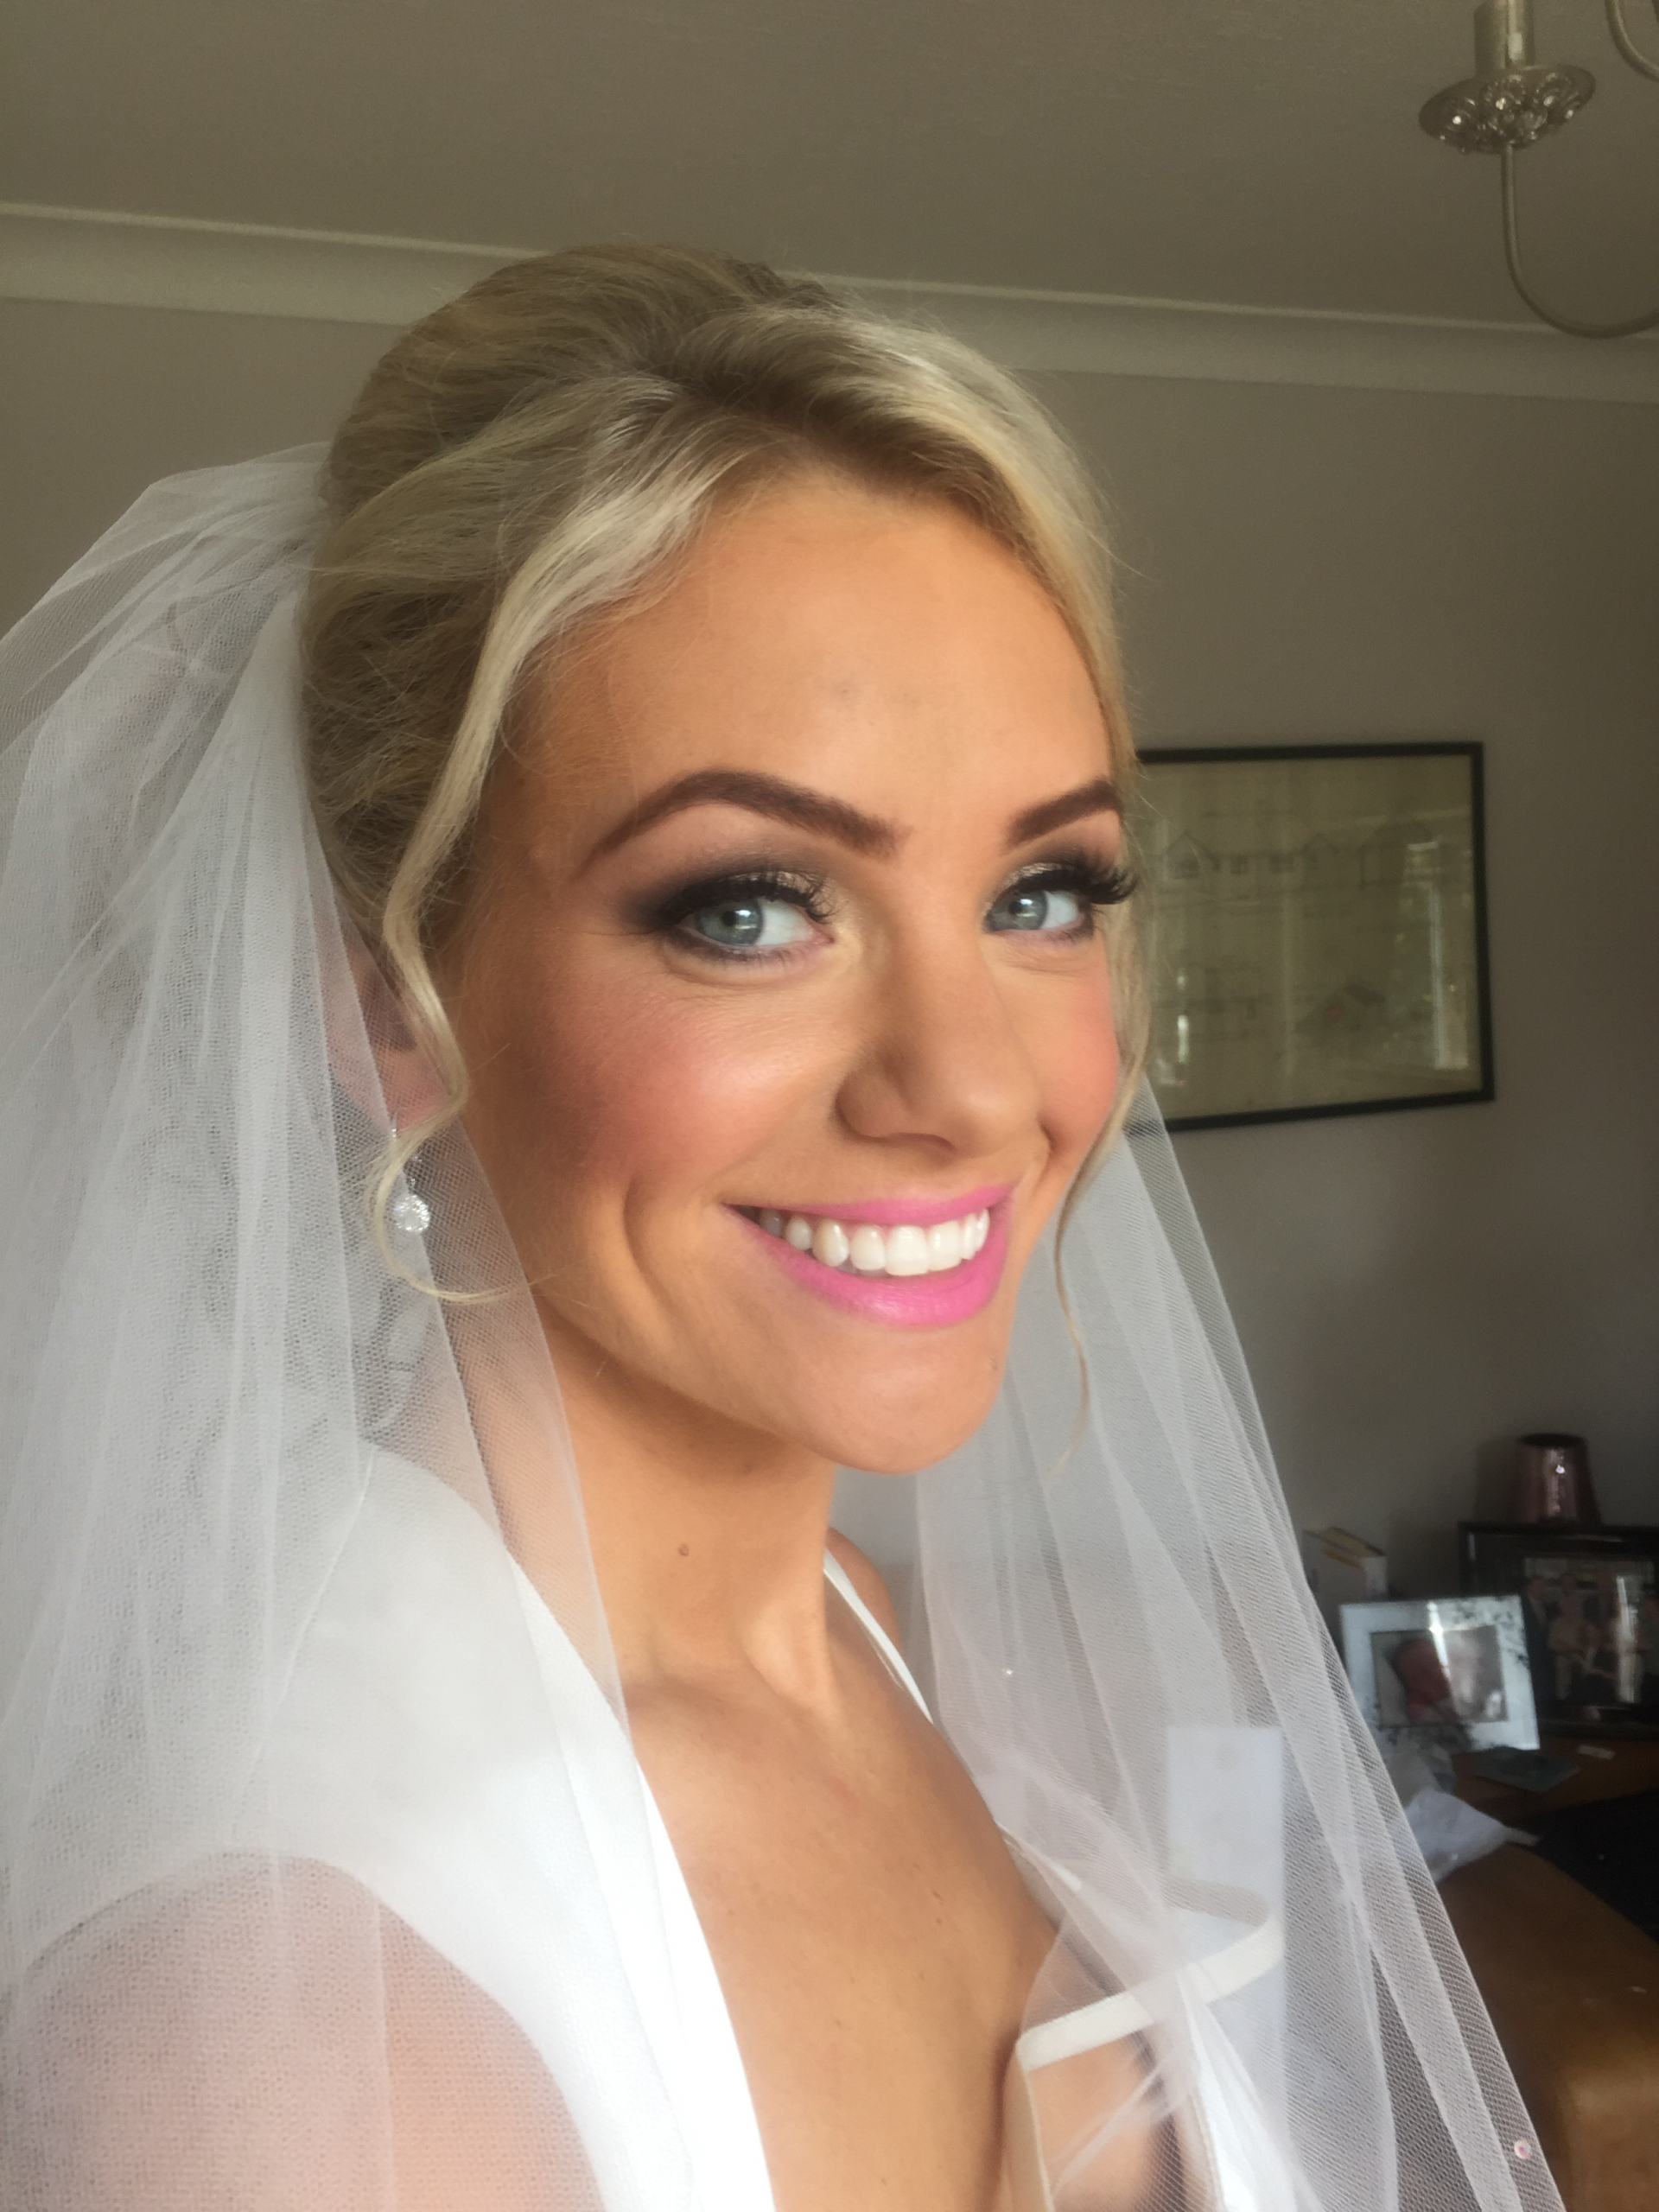 Mac Makeup Artist For Wedding
 Mac makeup artist for weddings Makeup